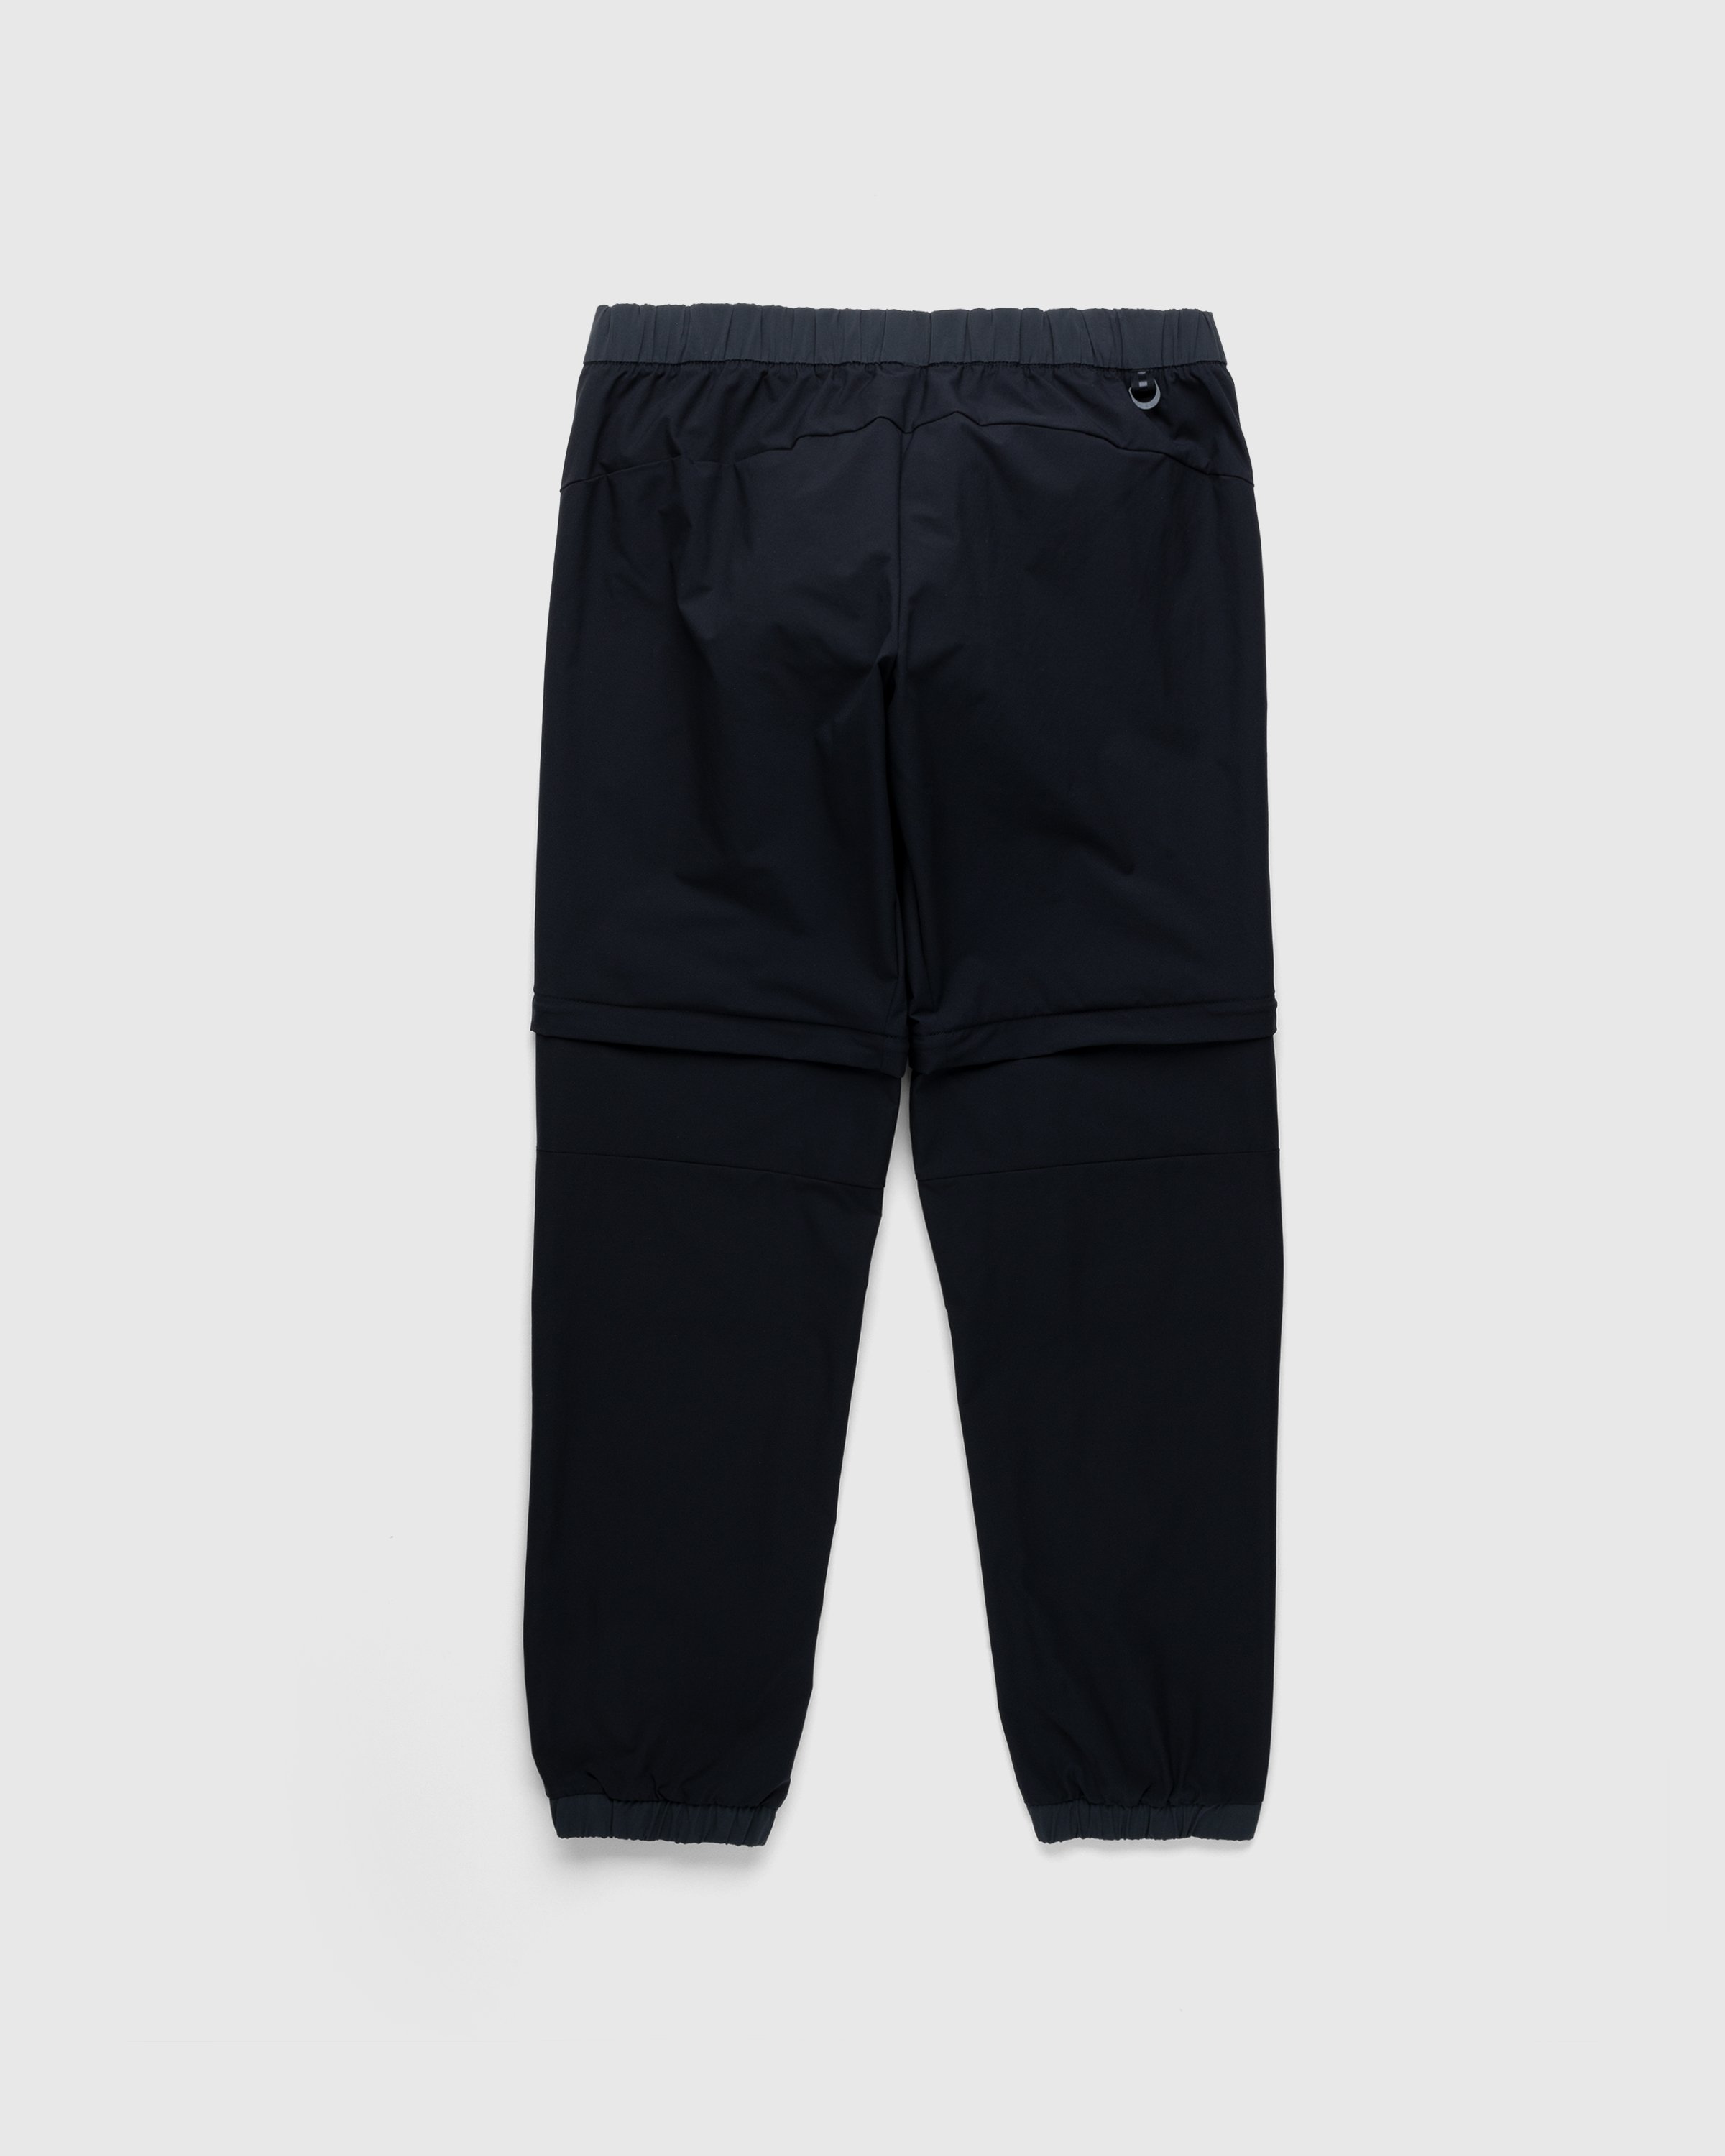 Adidas - Voyager Pants Black/Carbon - Clothing - Black - Image 2